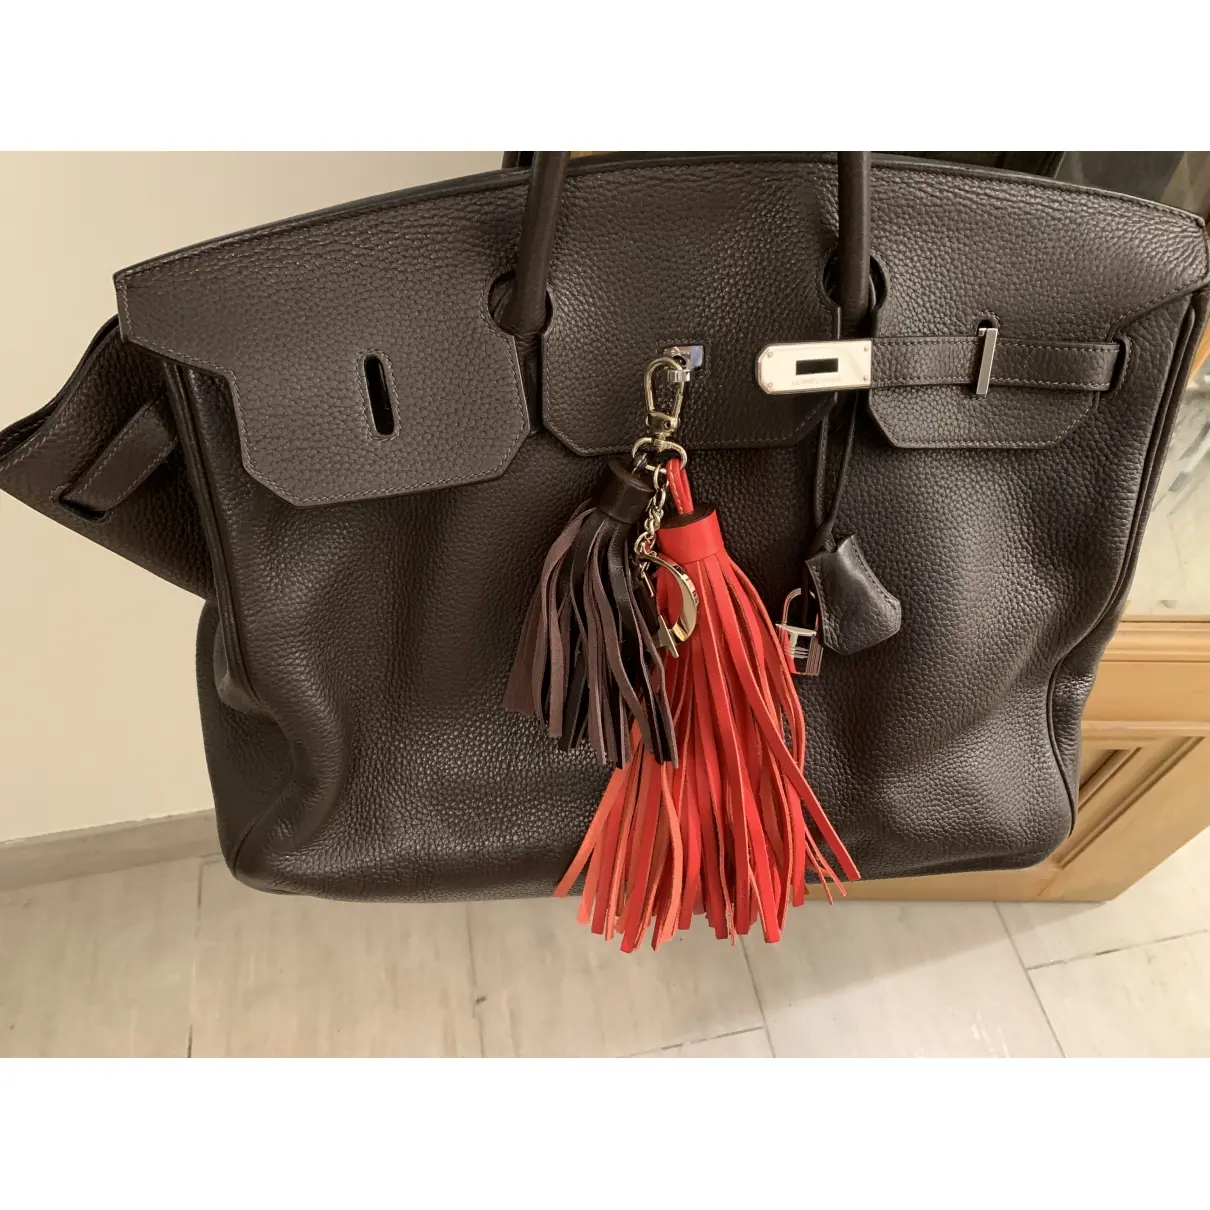 Carolina Herrera Leather bag charm for sale